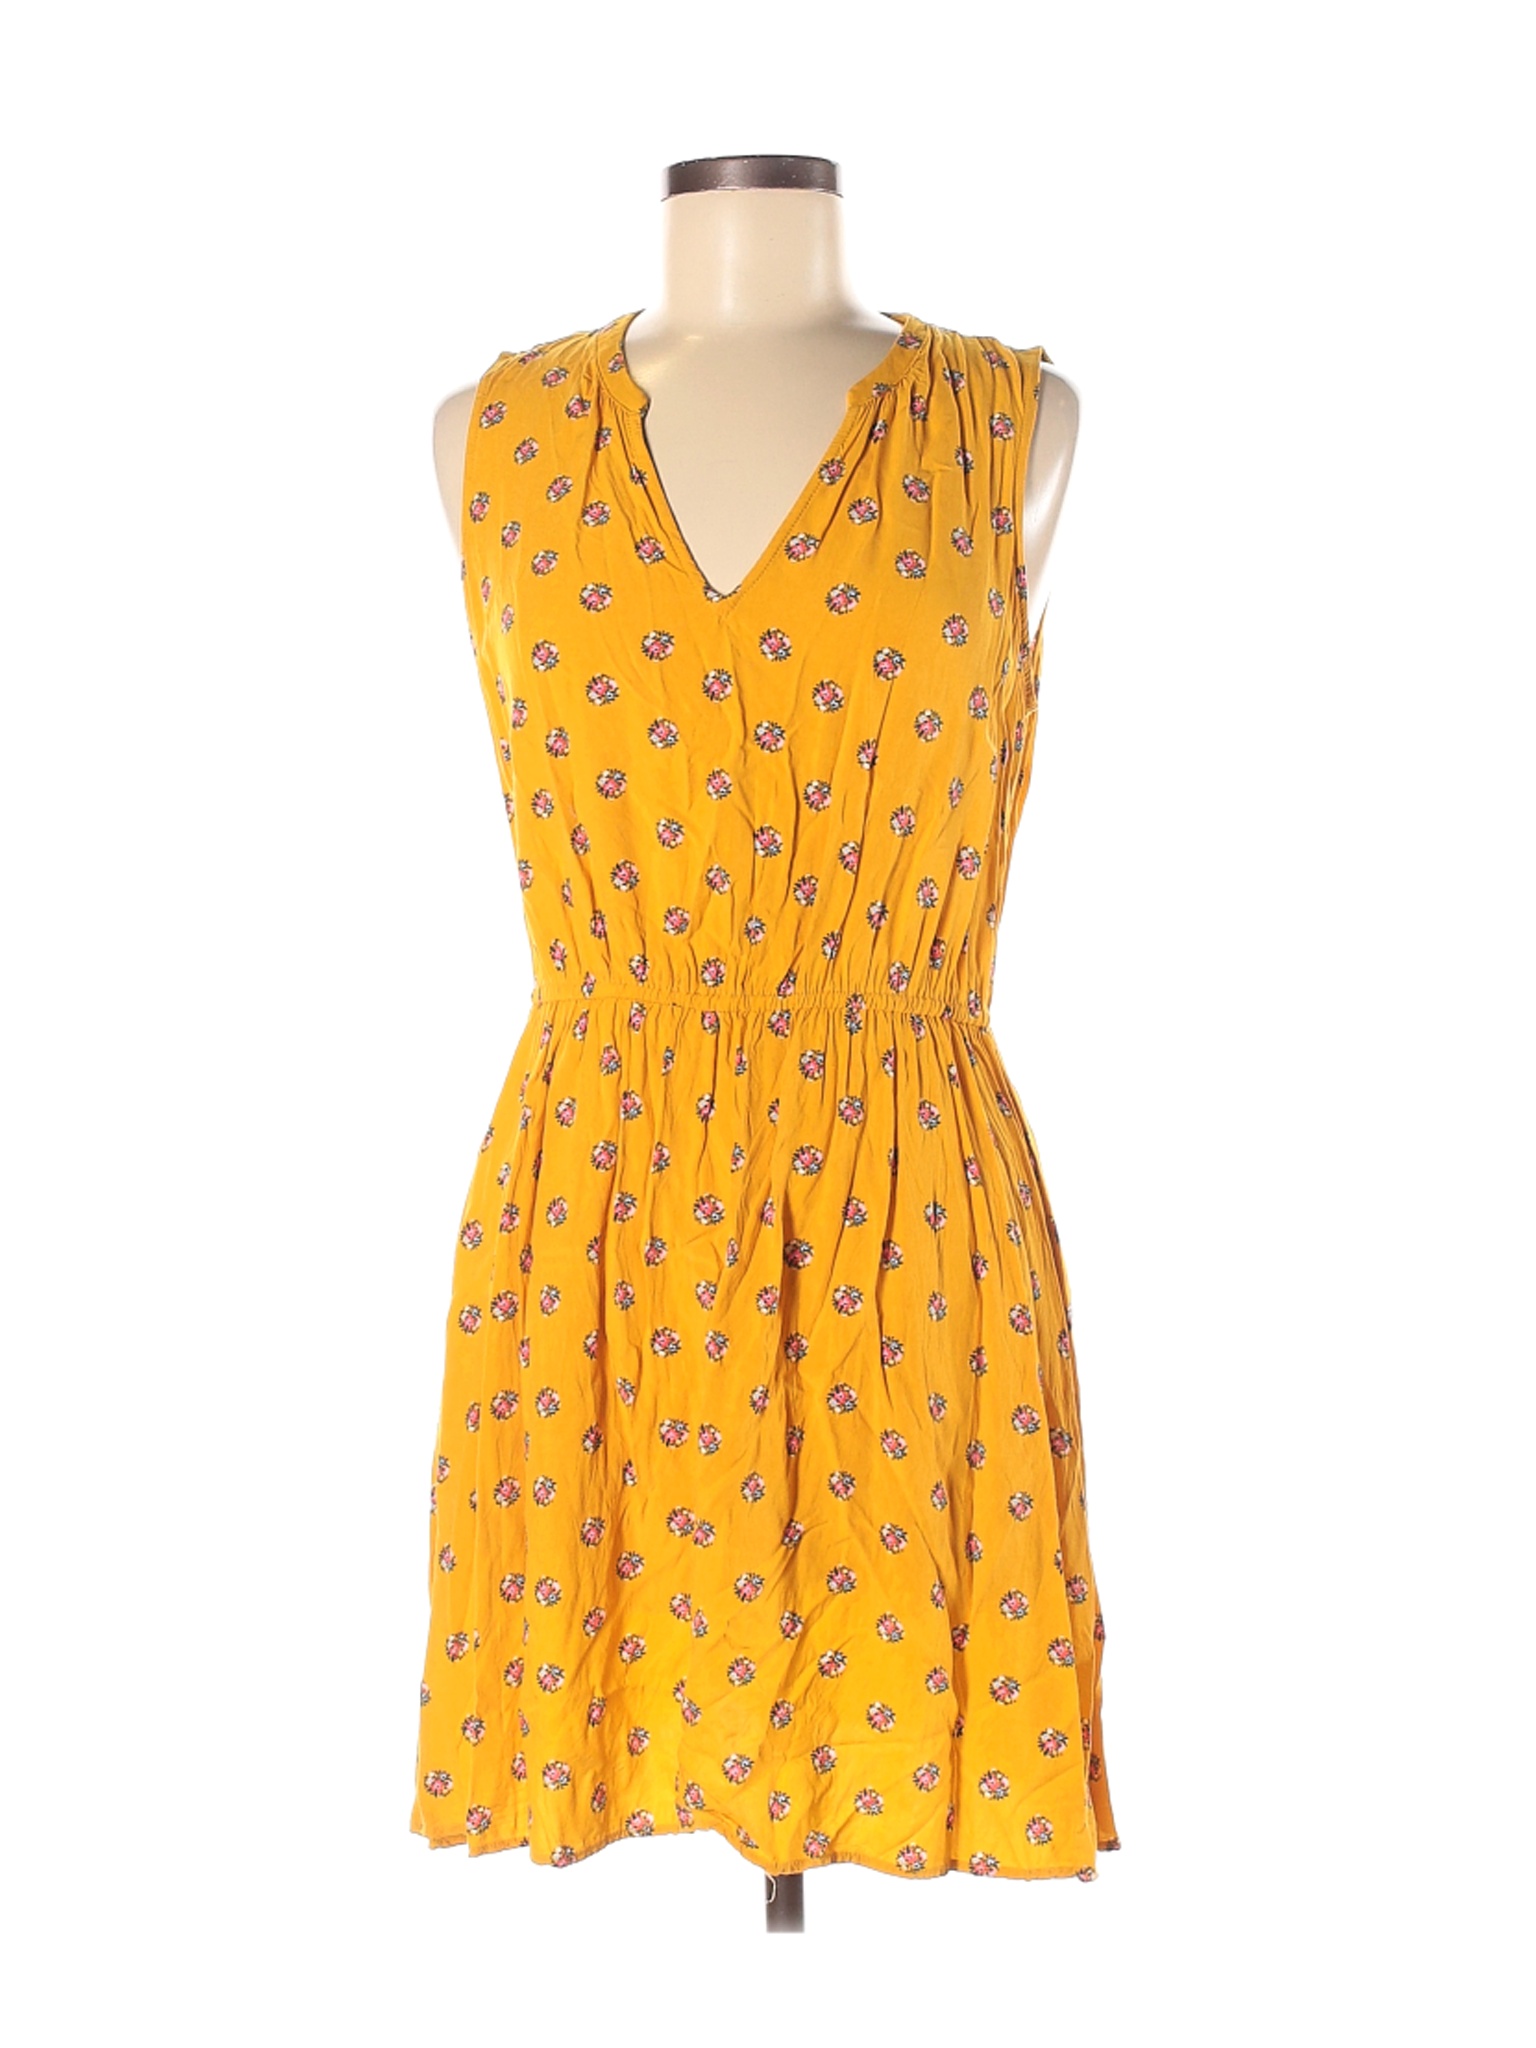 Old Navy Women Yellow Casual Dress M | eBay